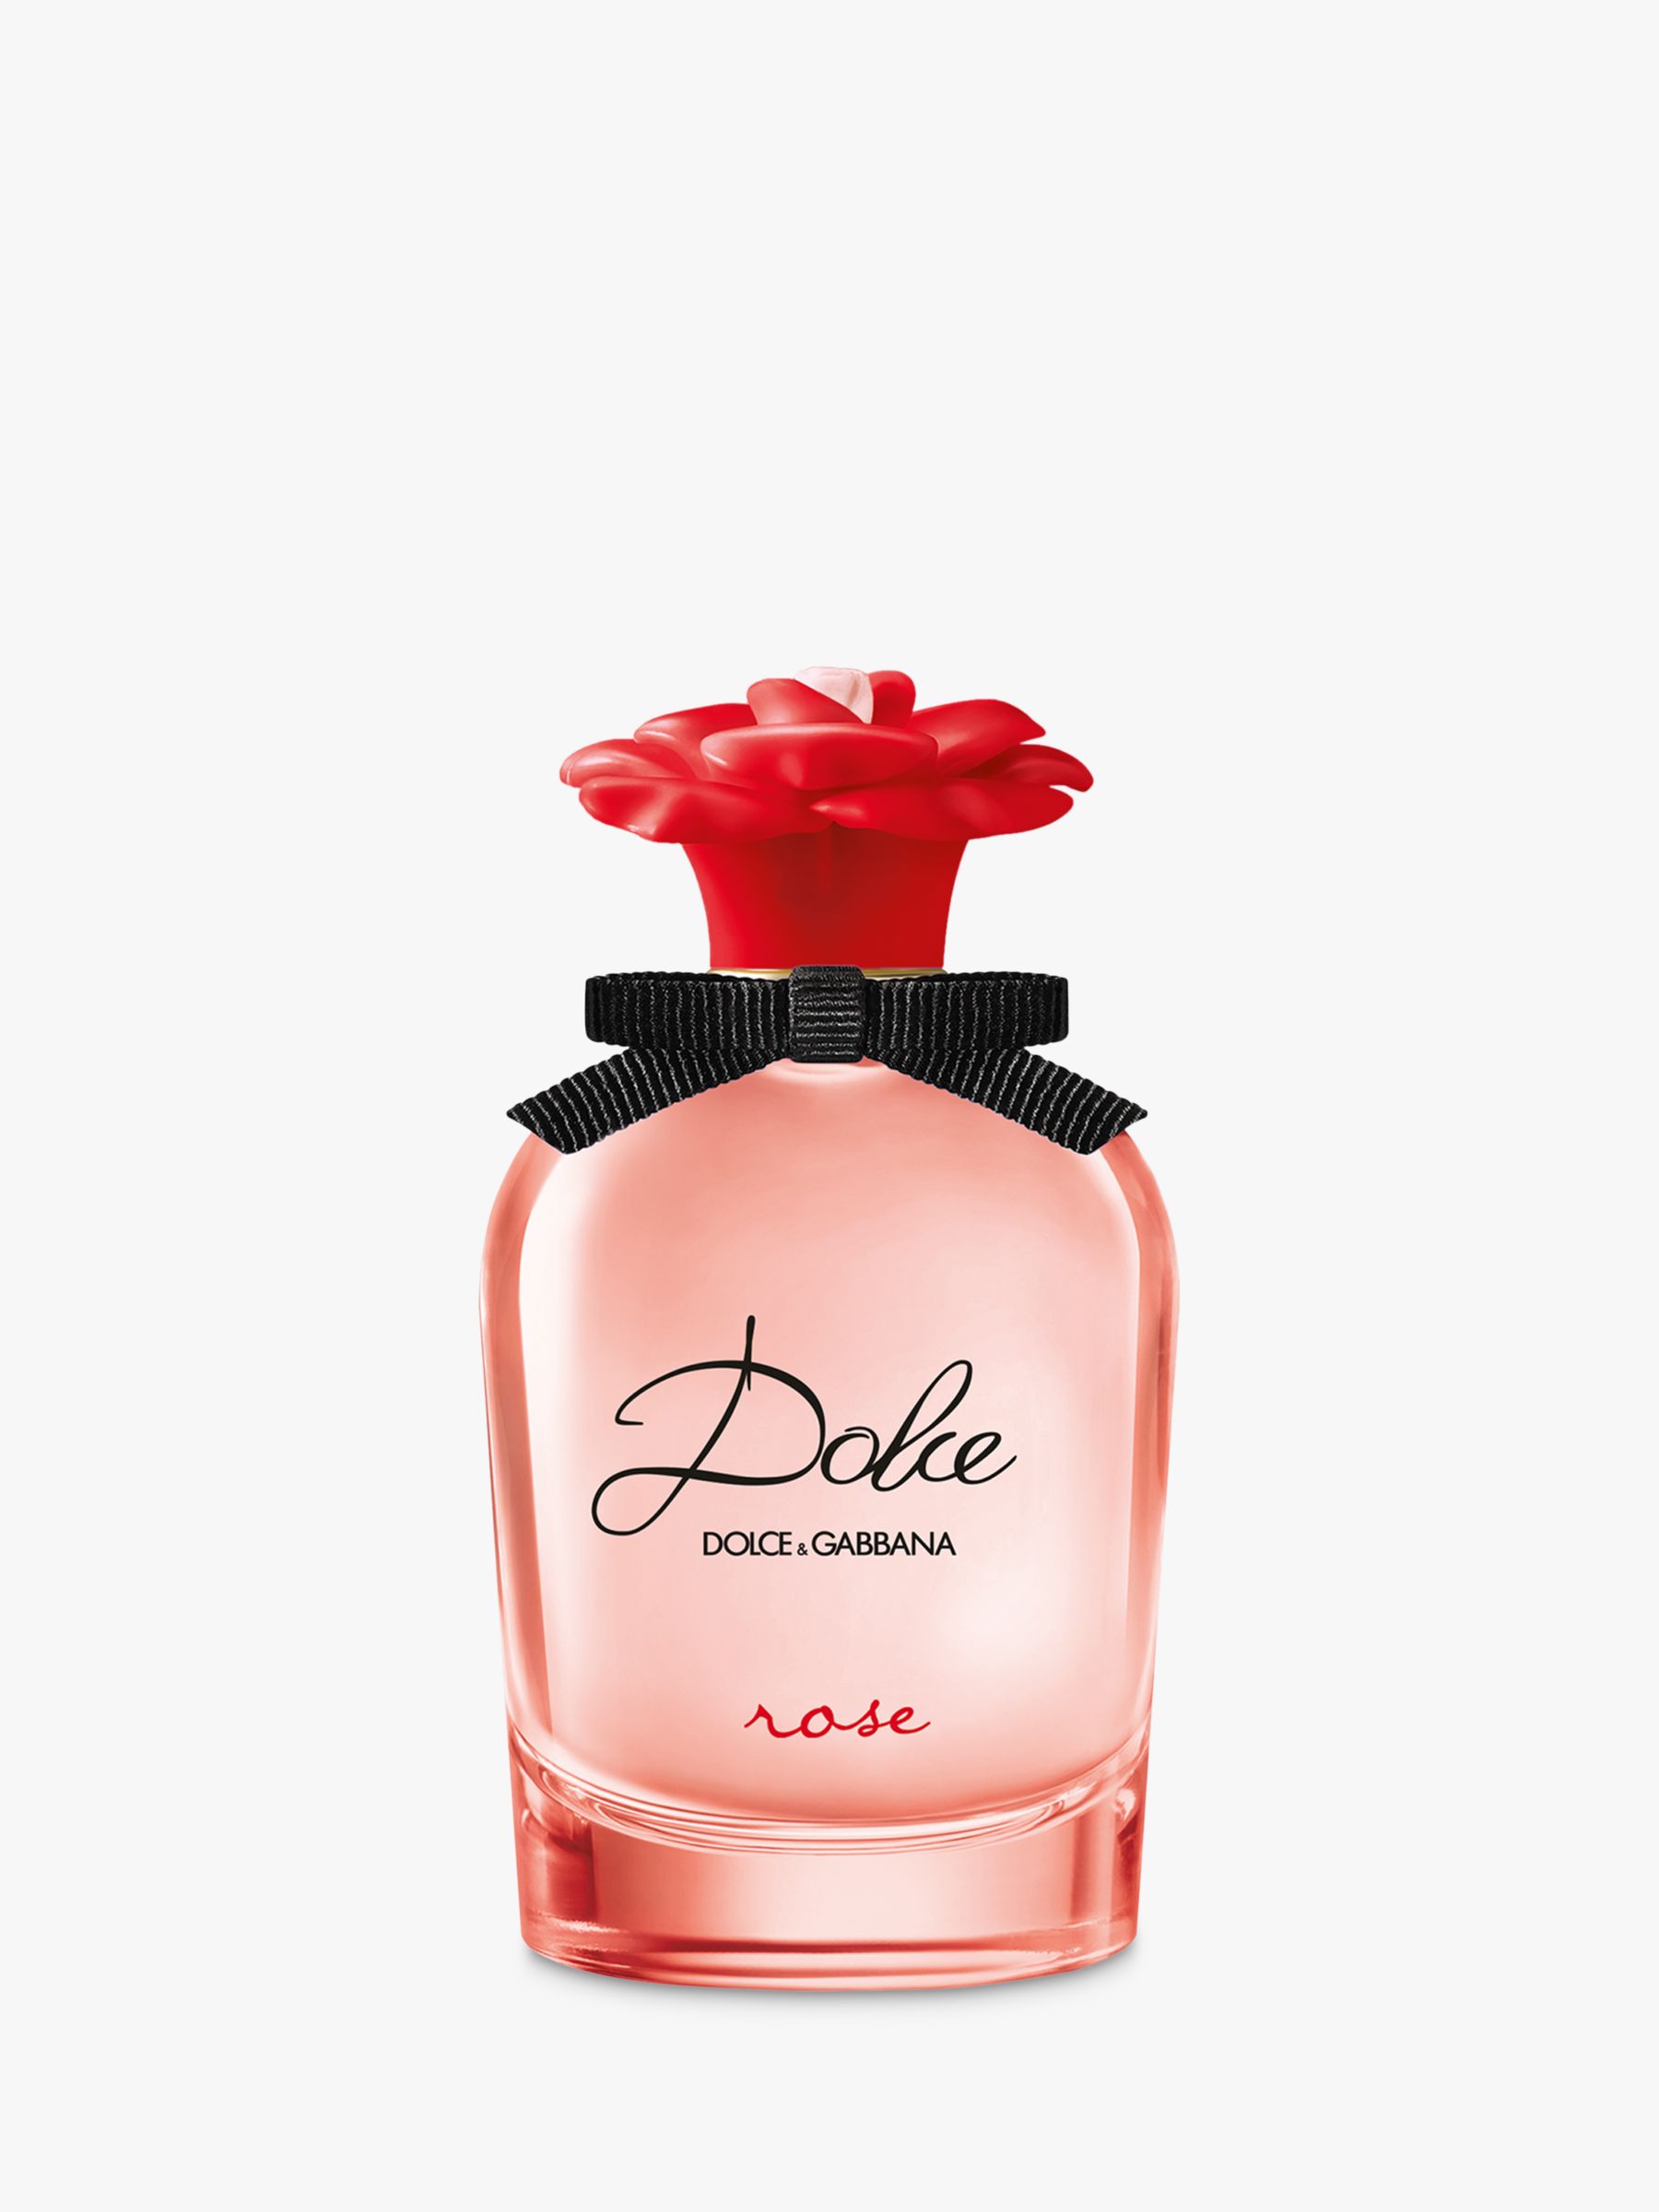 Dolce & Gabbana Dolce Rose Eau de Toilette, 75ml 1